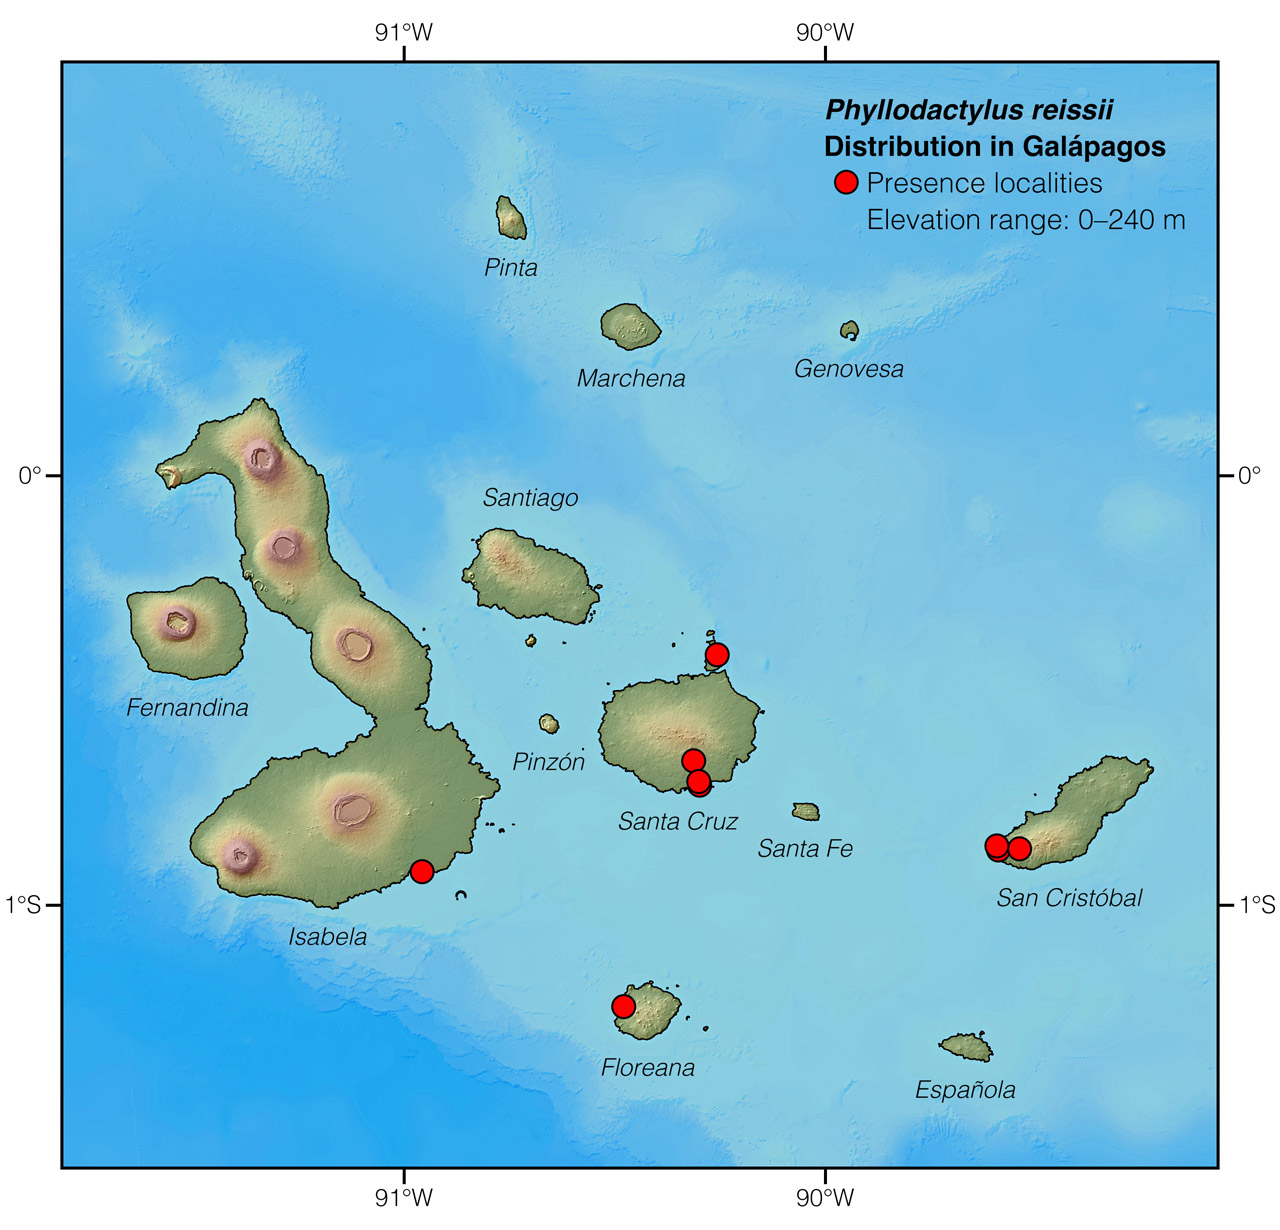 Distribution of Phyllodactylus reissii in Galápagos